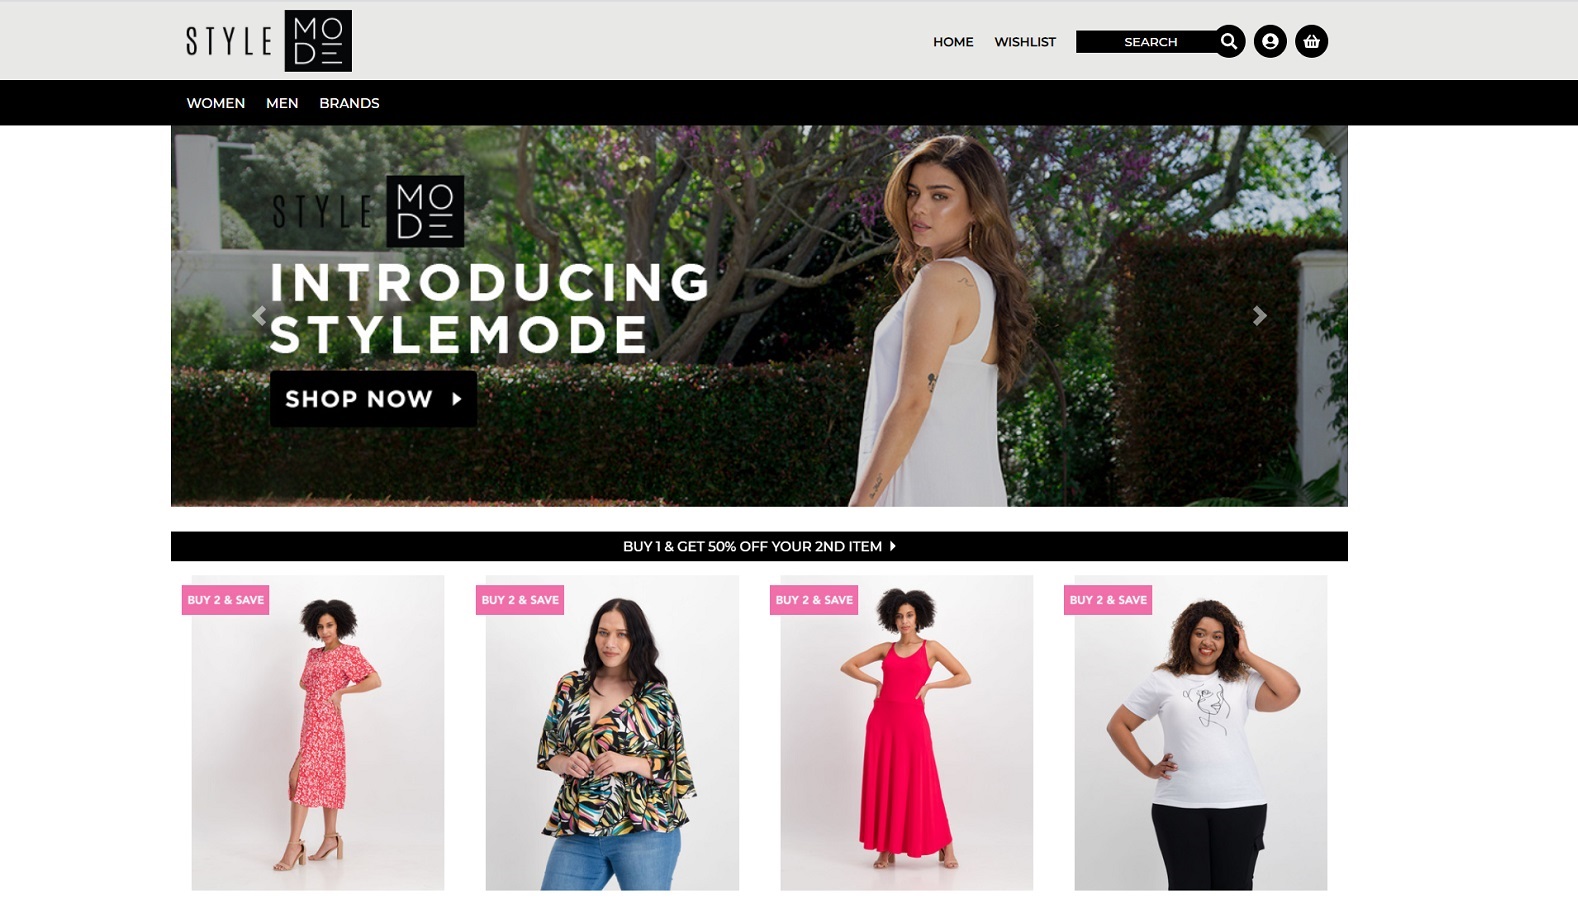 gewelddadig Onrechtvaardig Zwijgend New online fashion shopping site launches in South Africa - Memeburn